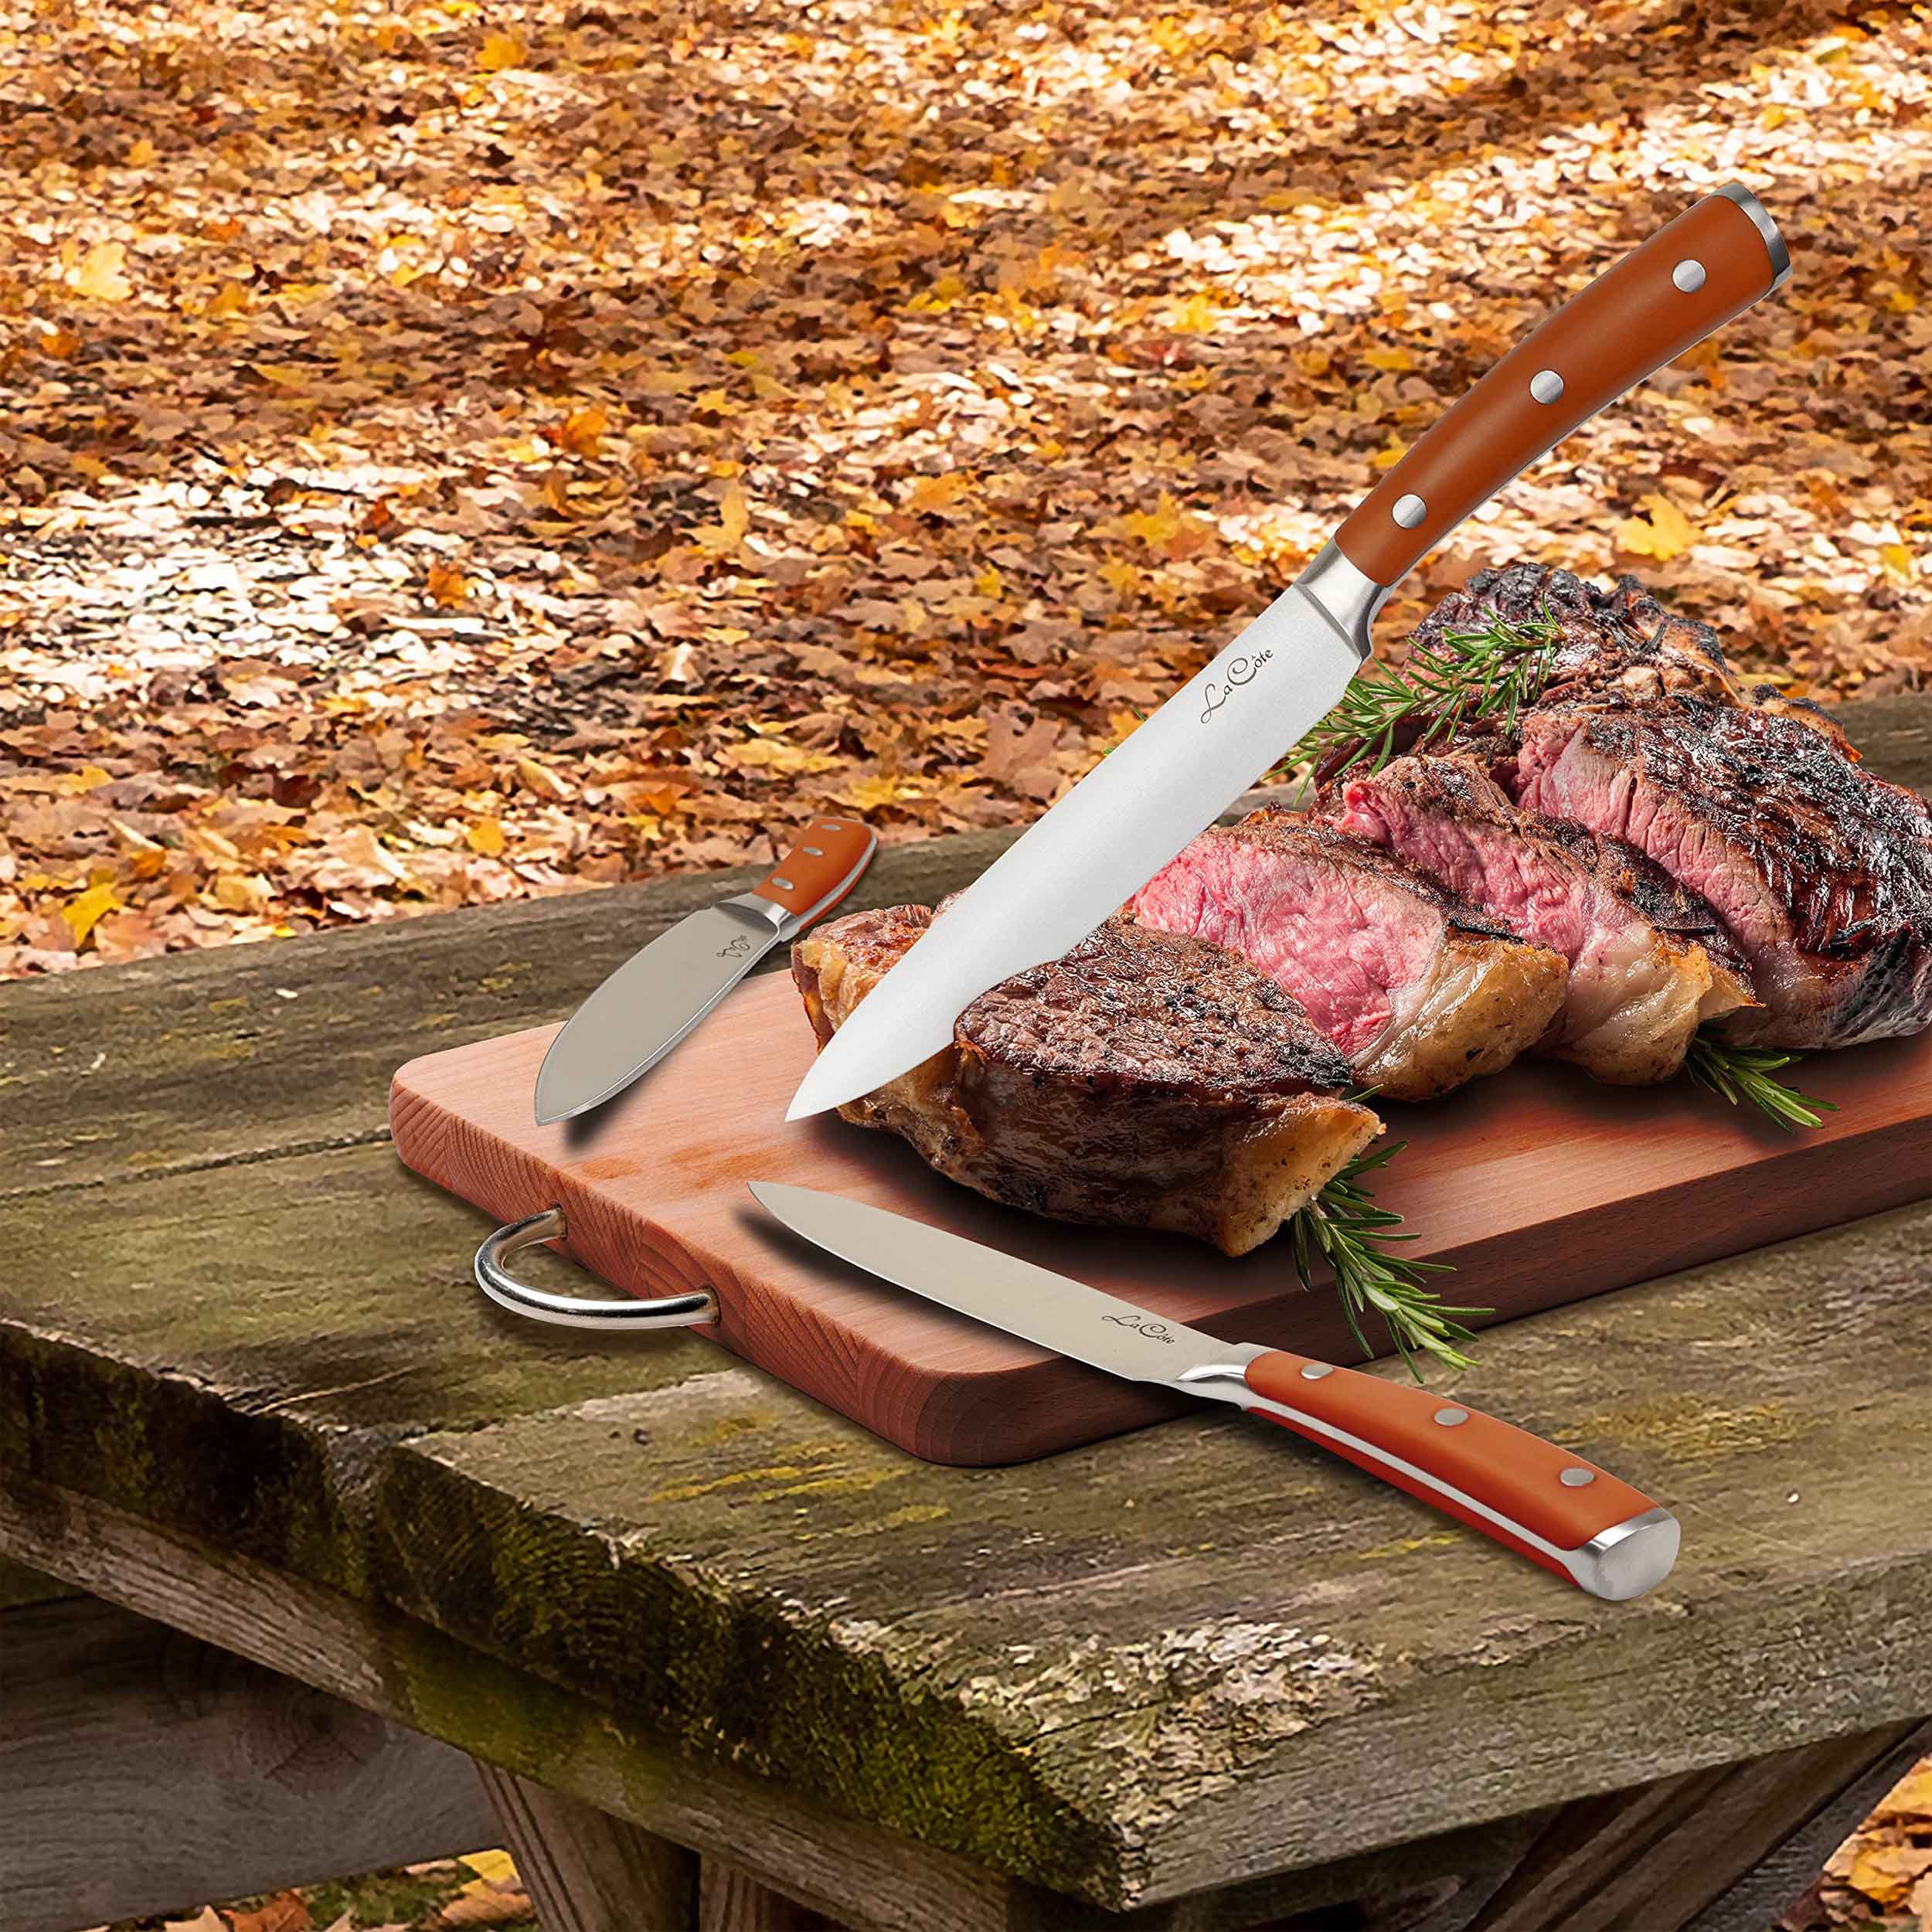 La Cote 6 Piece Maple Steak Knives Set Japanese Steel straight edge bl – La  Cote Homeware